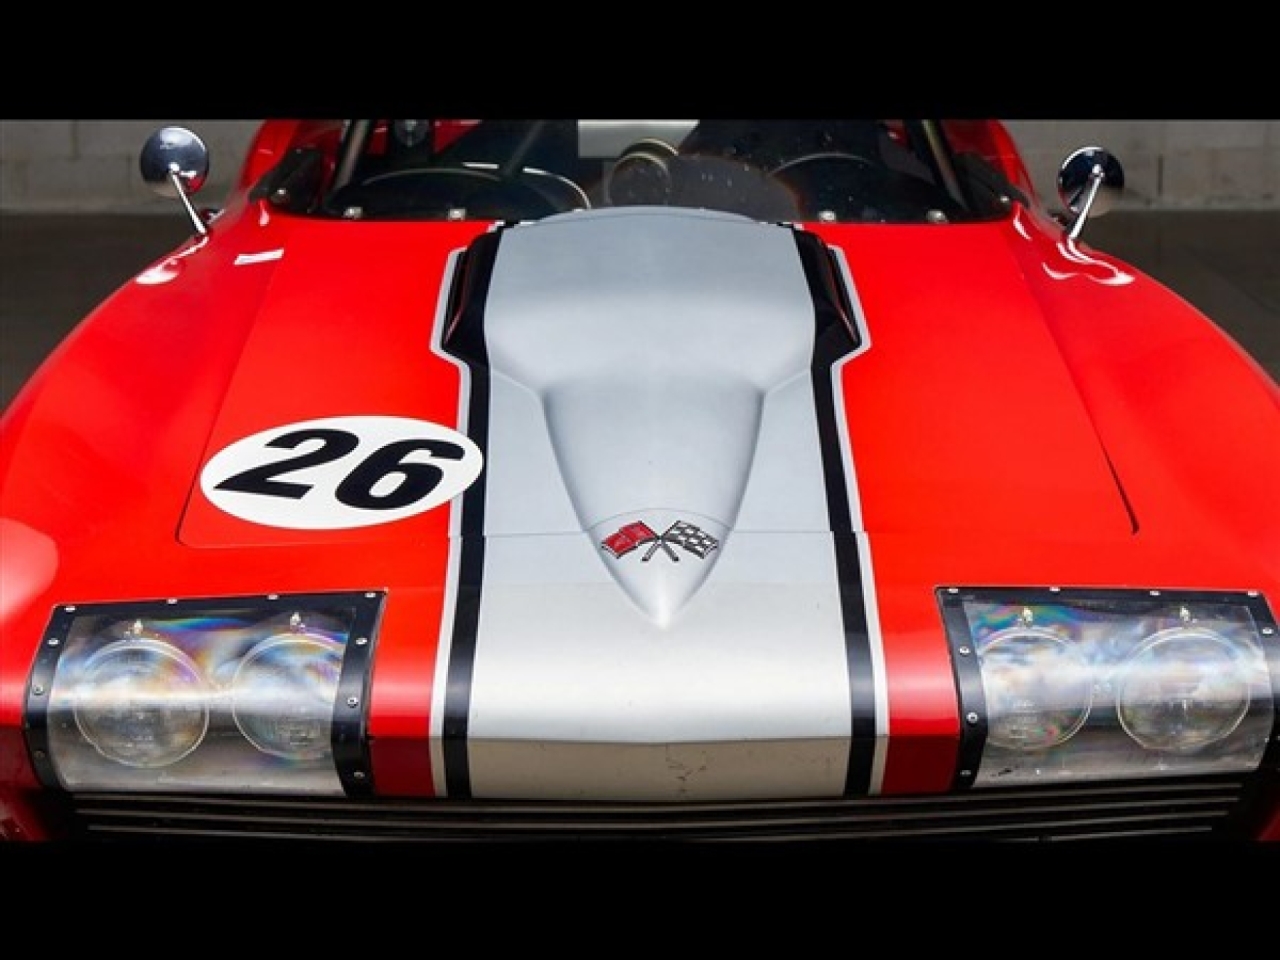 1965 Chevrolet Corvette Convertible (Historic Race Car)